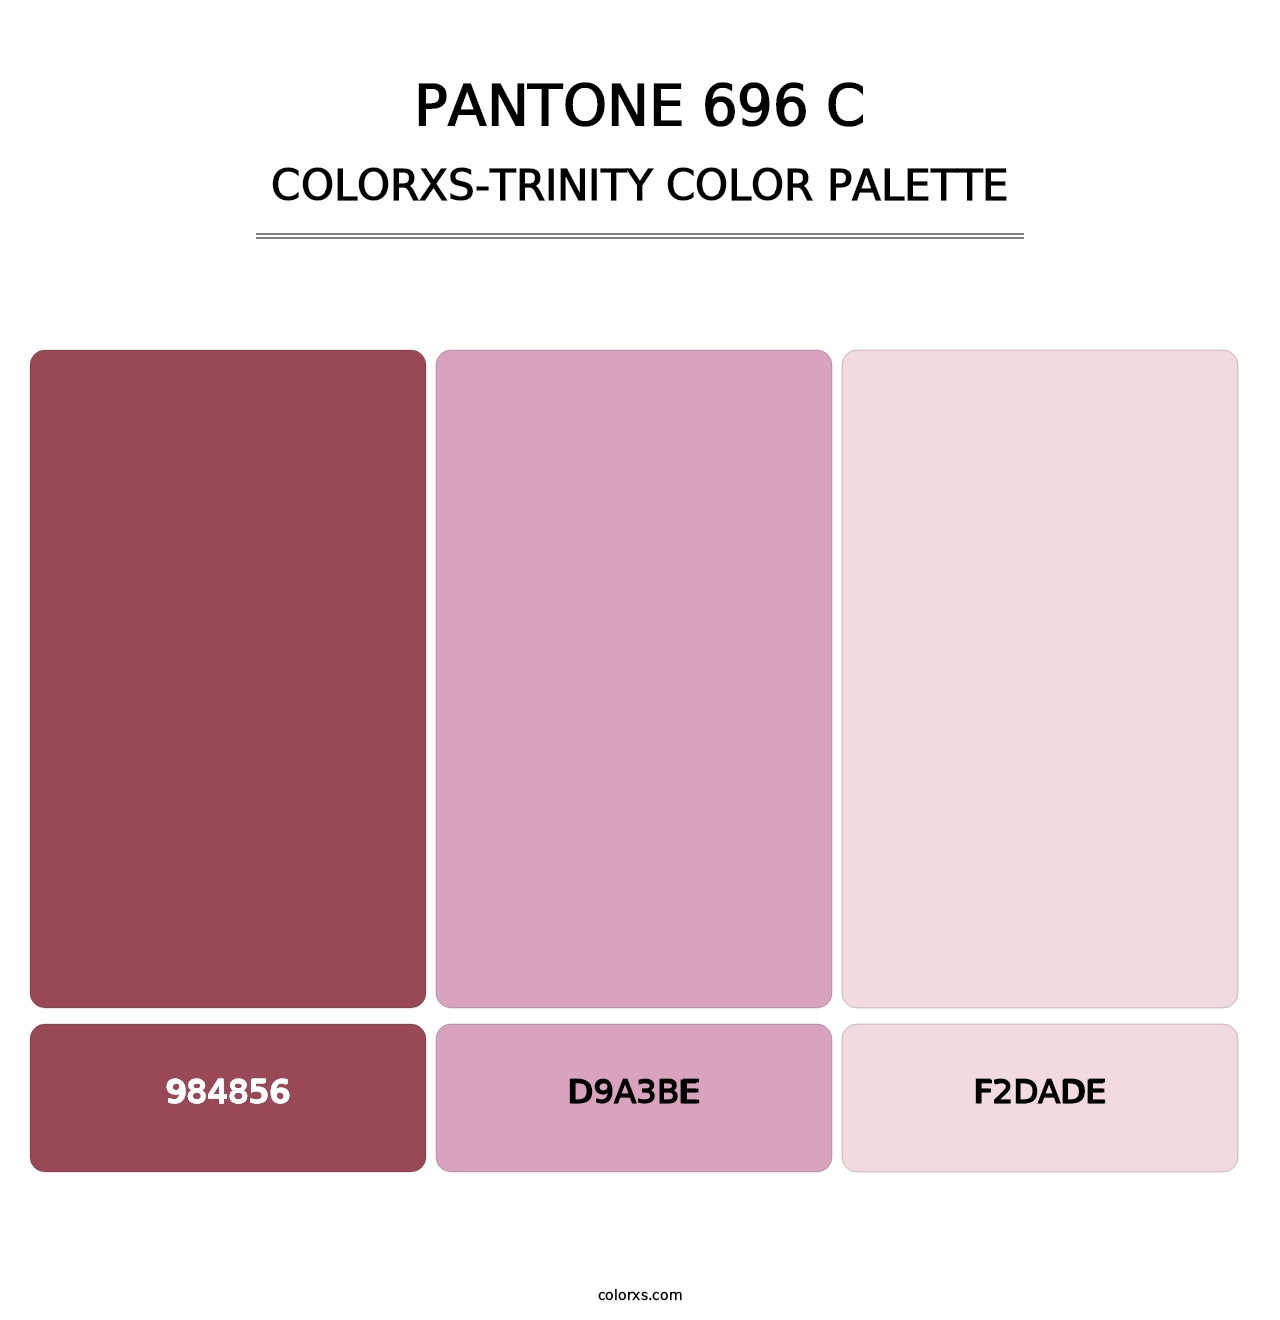 PANTONE 696 C - Colorxs Trinity Palette